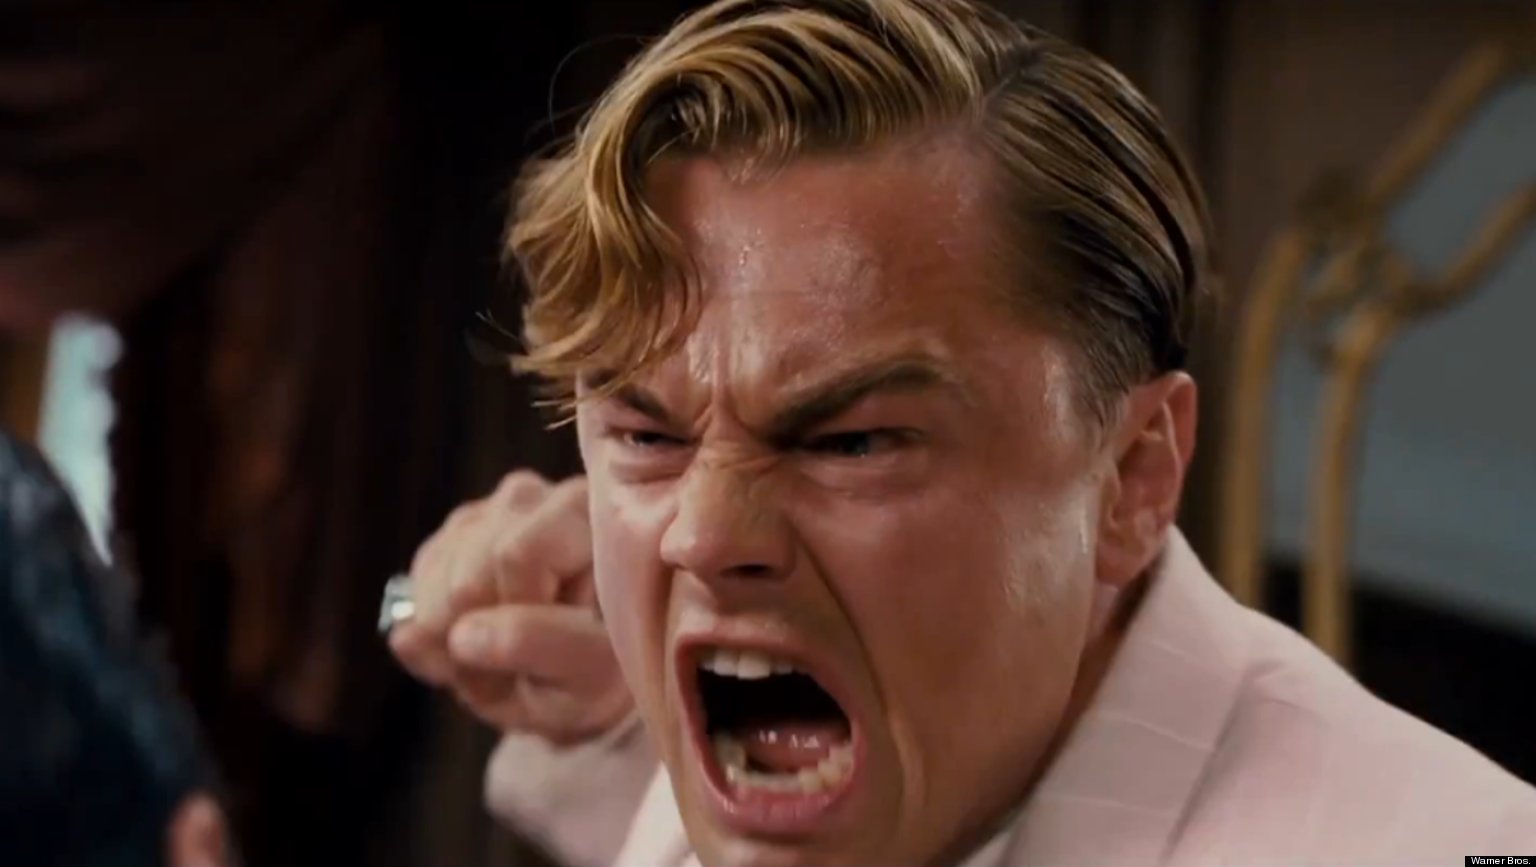 Leonardo DiCaprio Yelling: The Supercut (VIDEO) | HuffPost1536 x 867